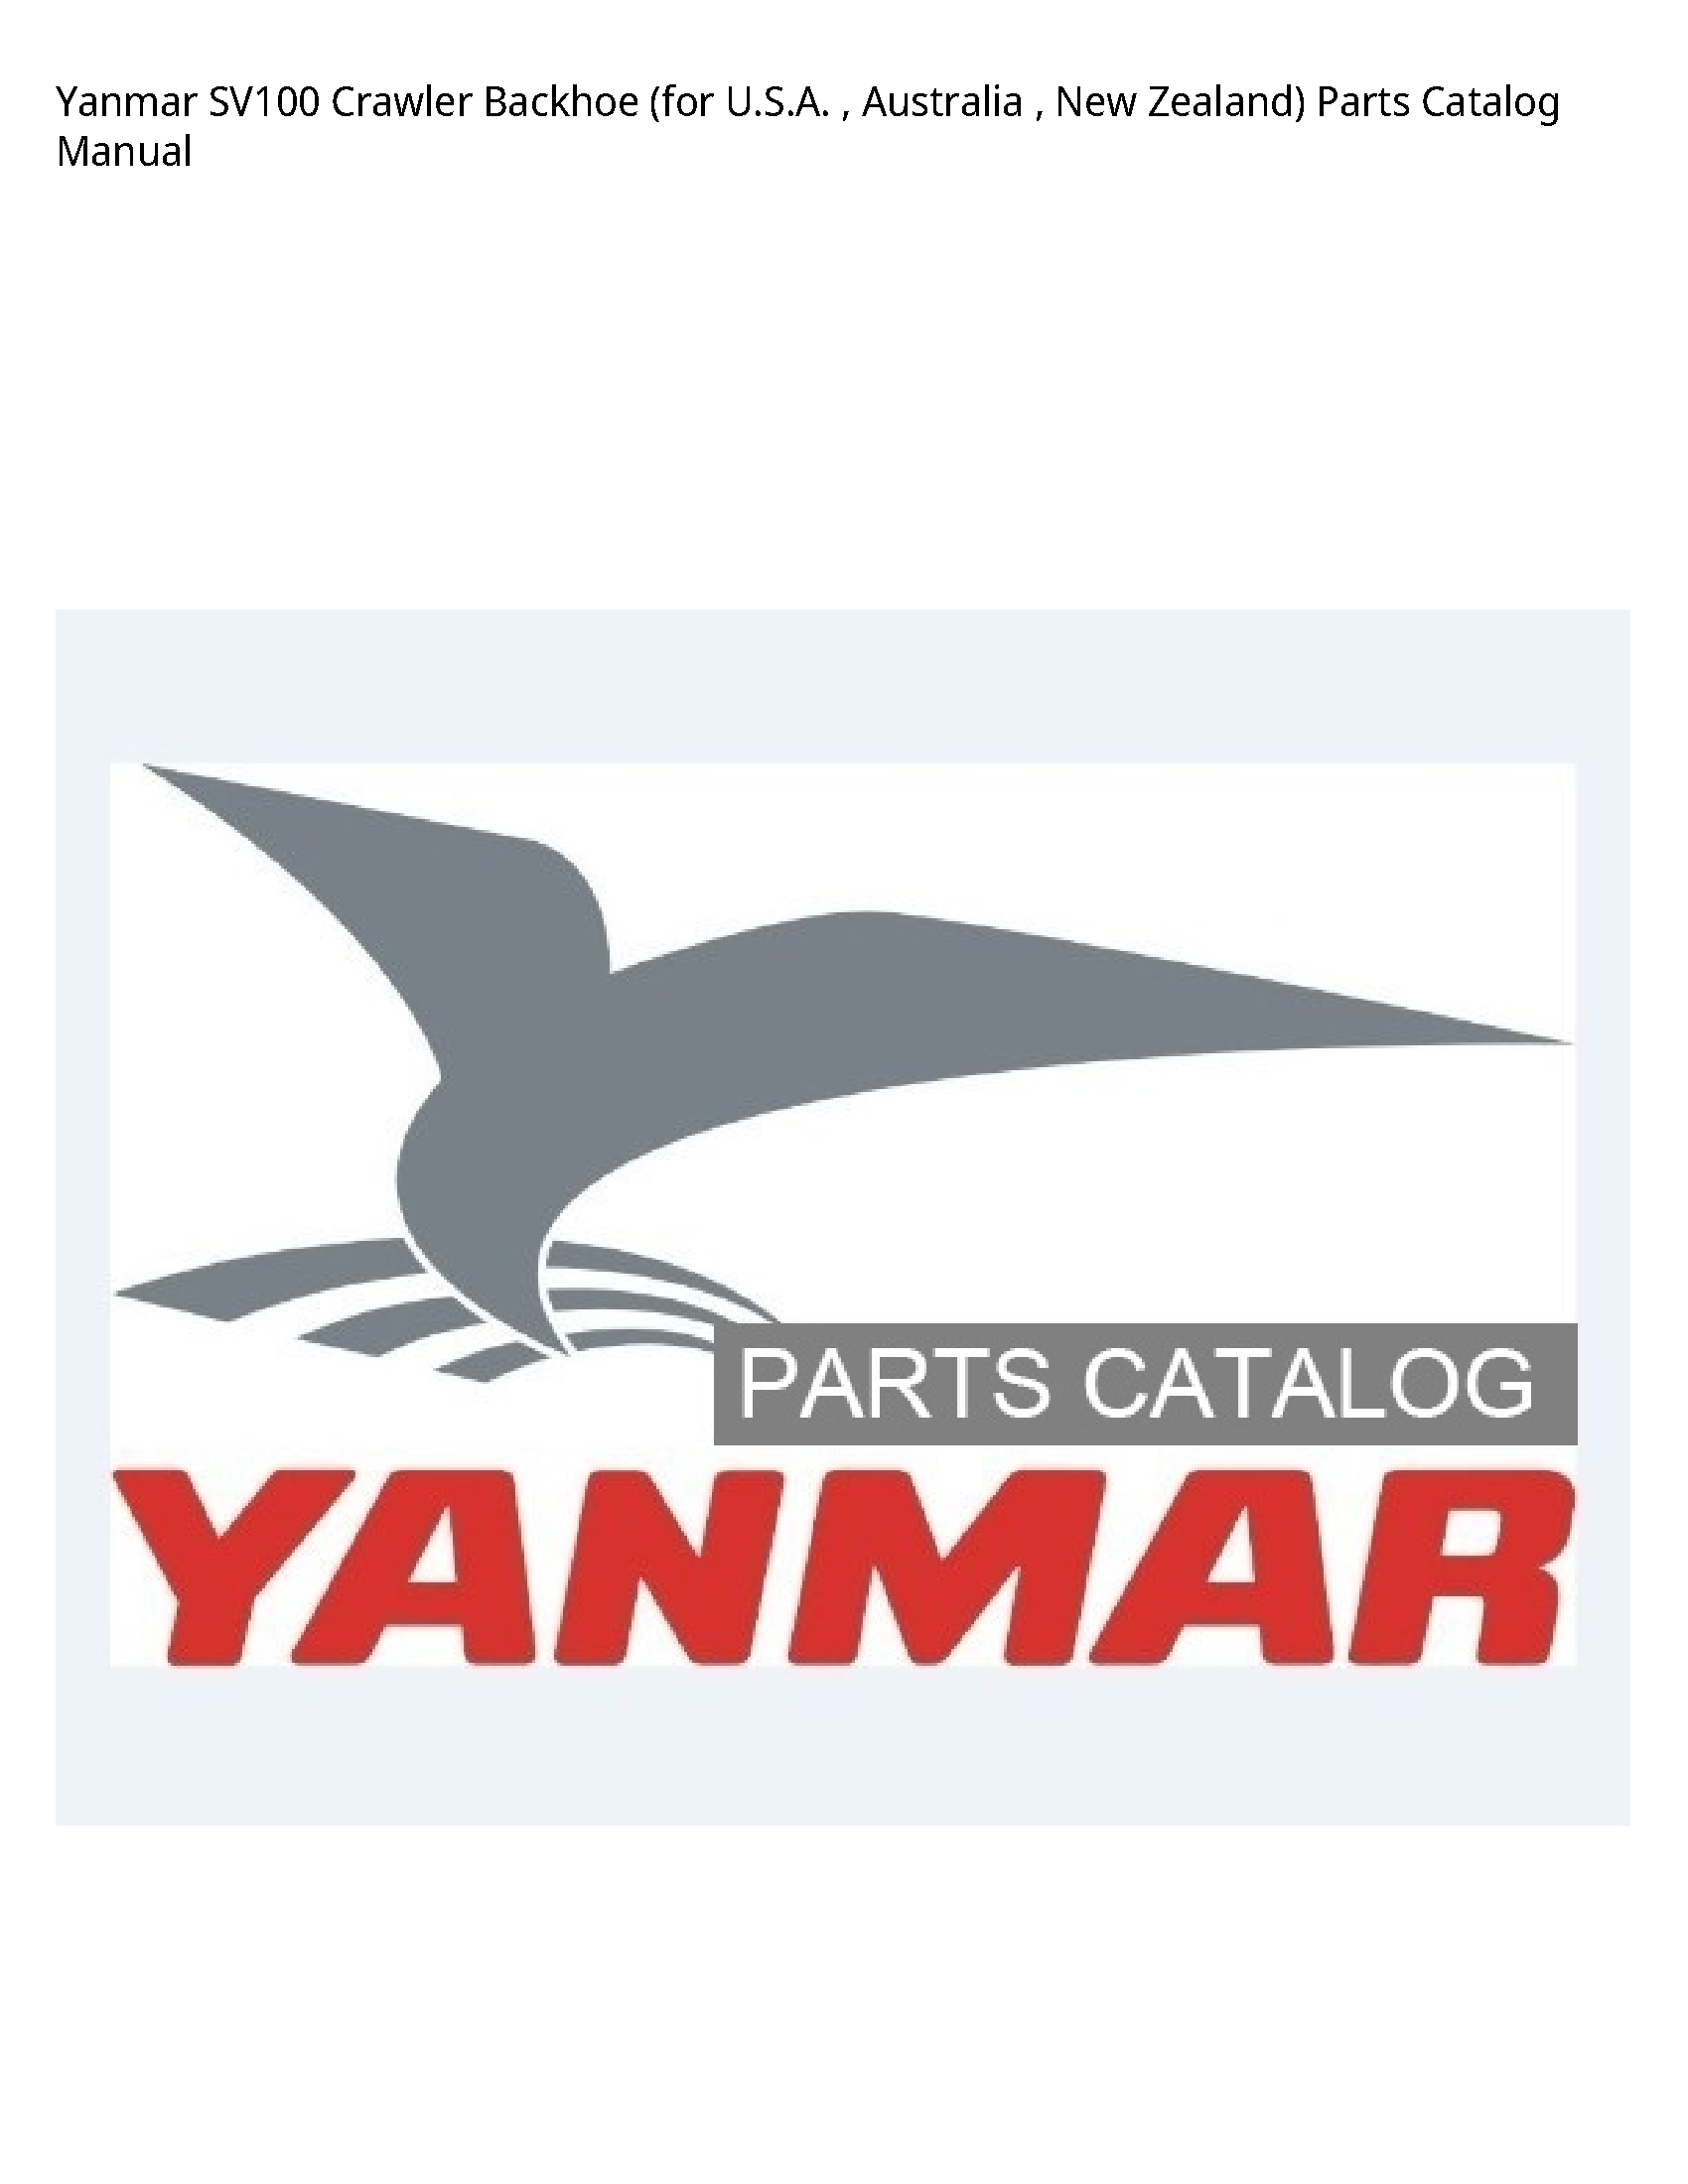 Yanmar SV100 Crawler Backhoe (for U.S.A. Australia New Zealand) Parts Catalog manual